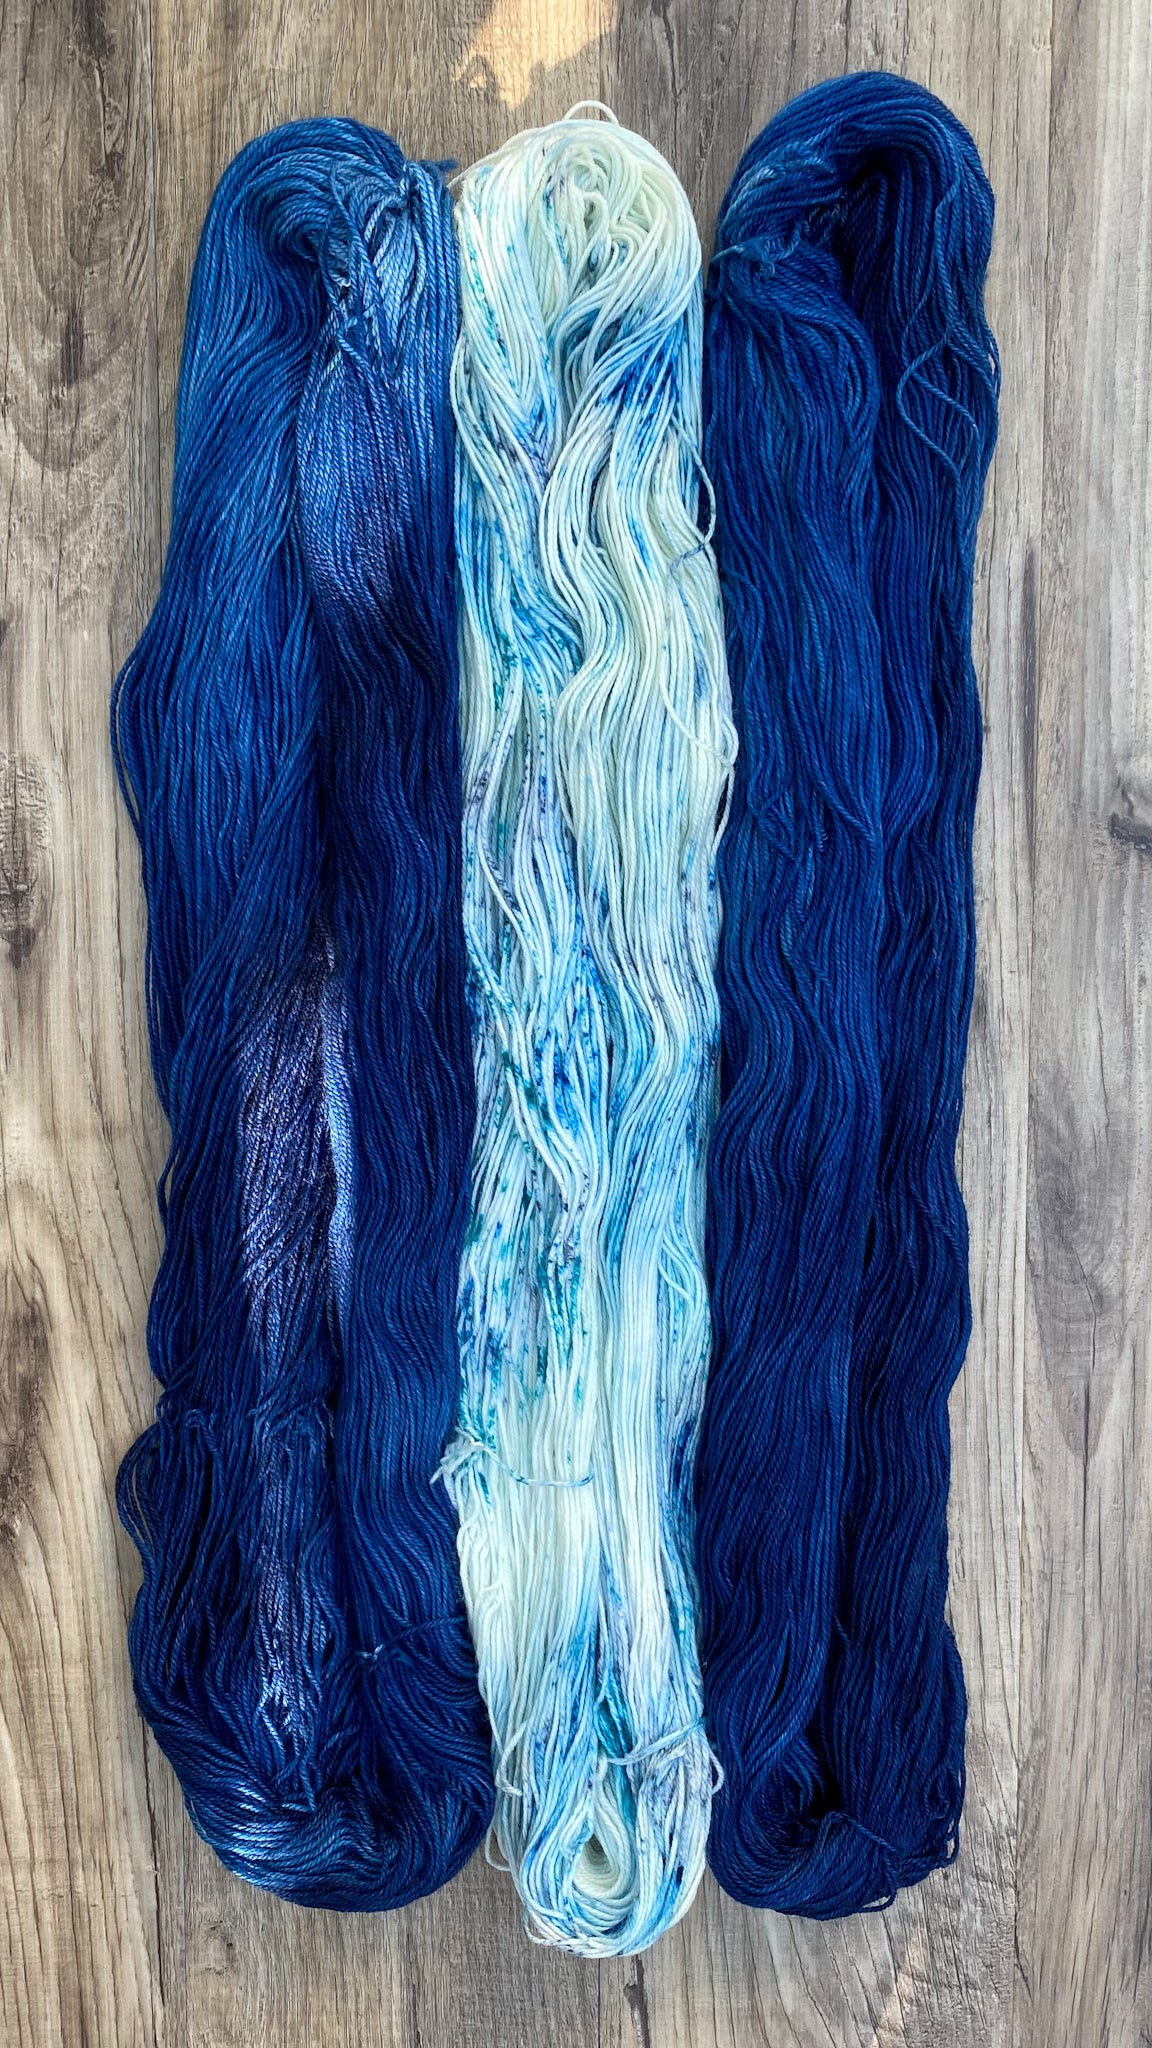 kollage SQUARE - Hand Dyed Yarn -  Blues